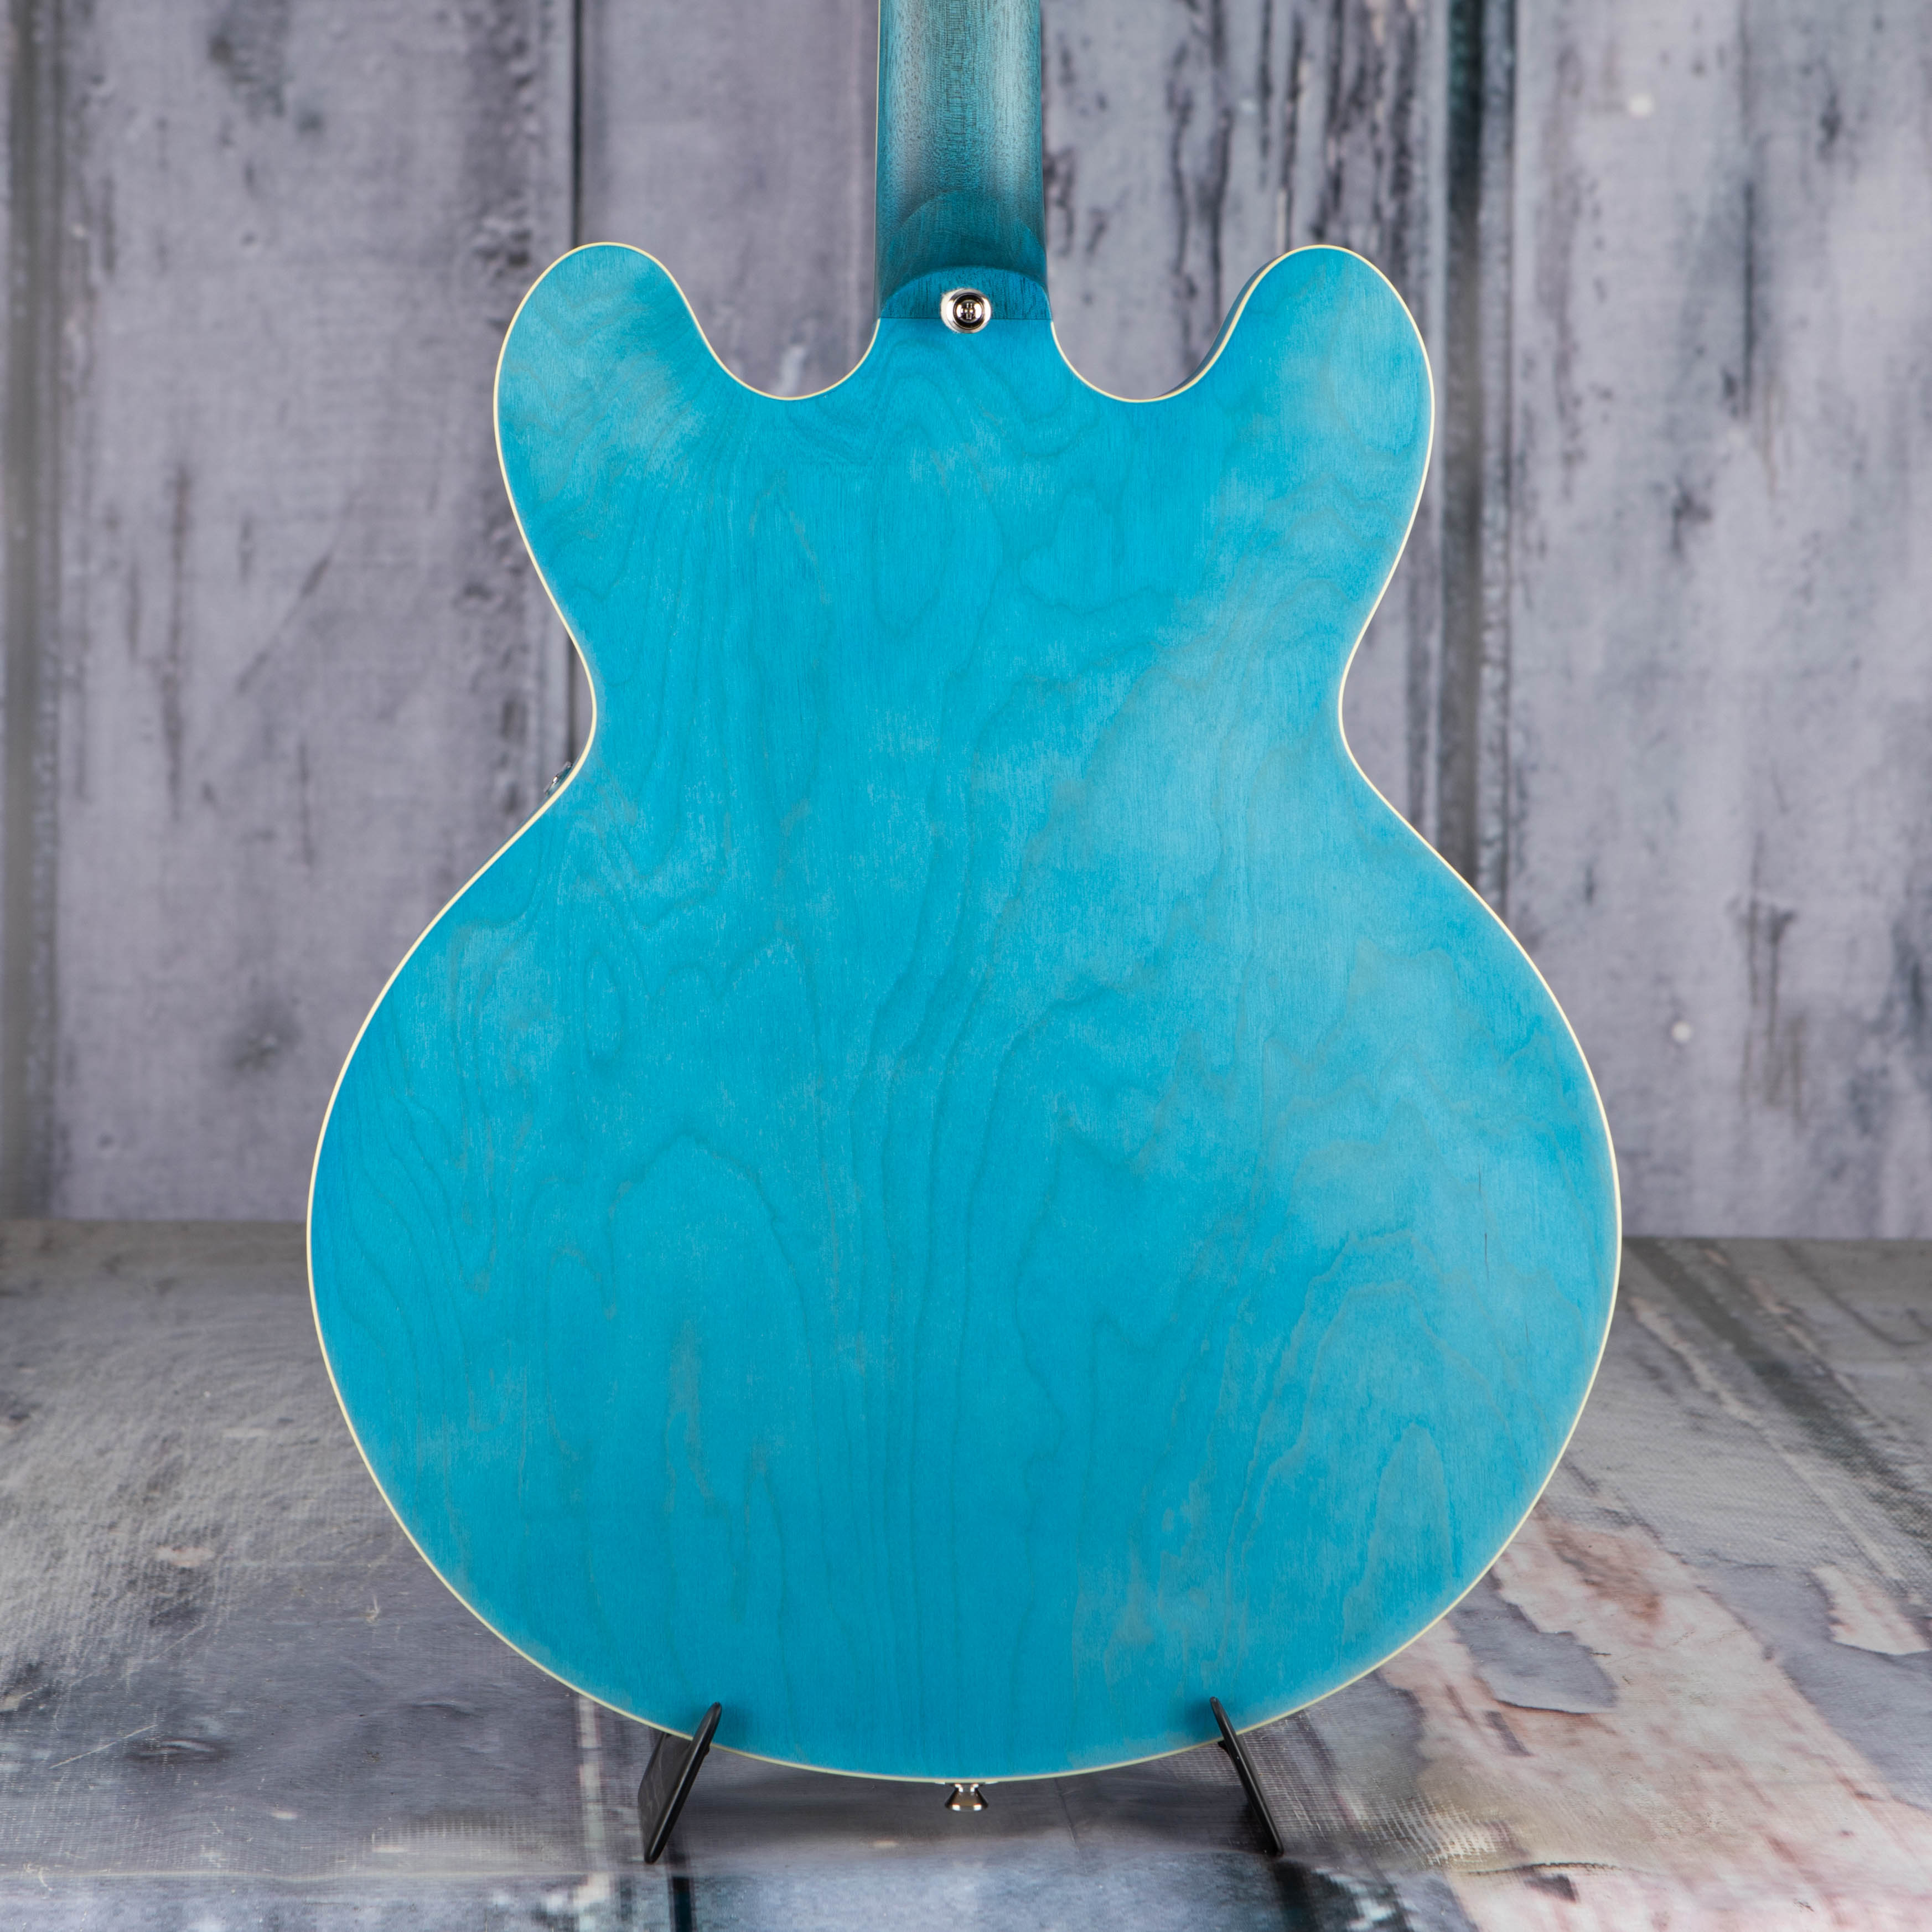 Epiphone Casino Worn Hollowbody Guitar, Worn Blue Denim, back closeup